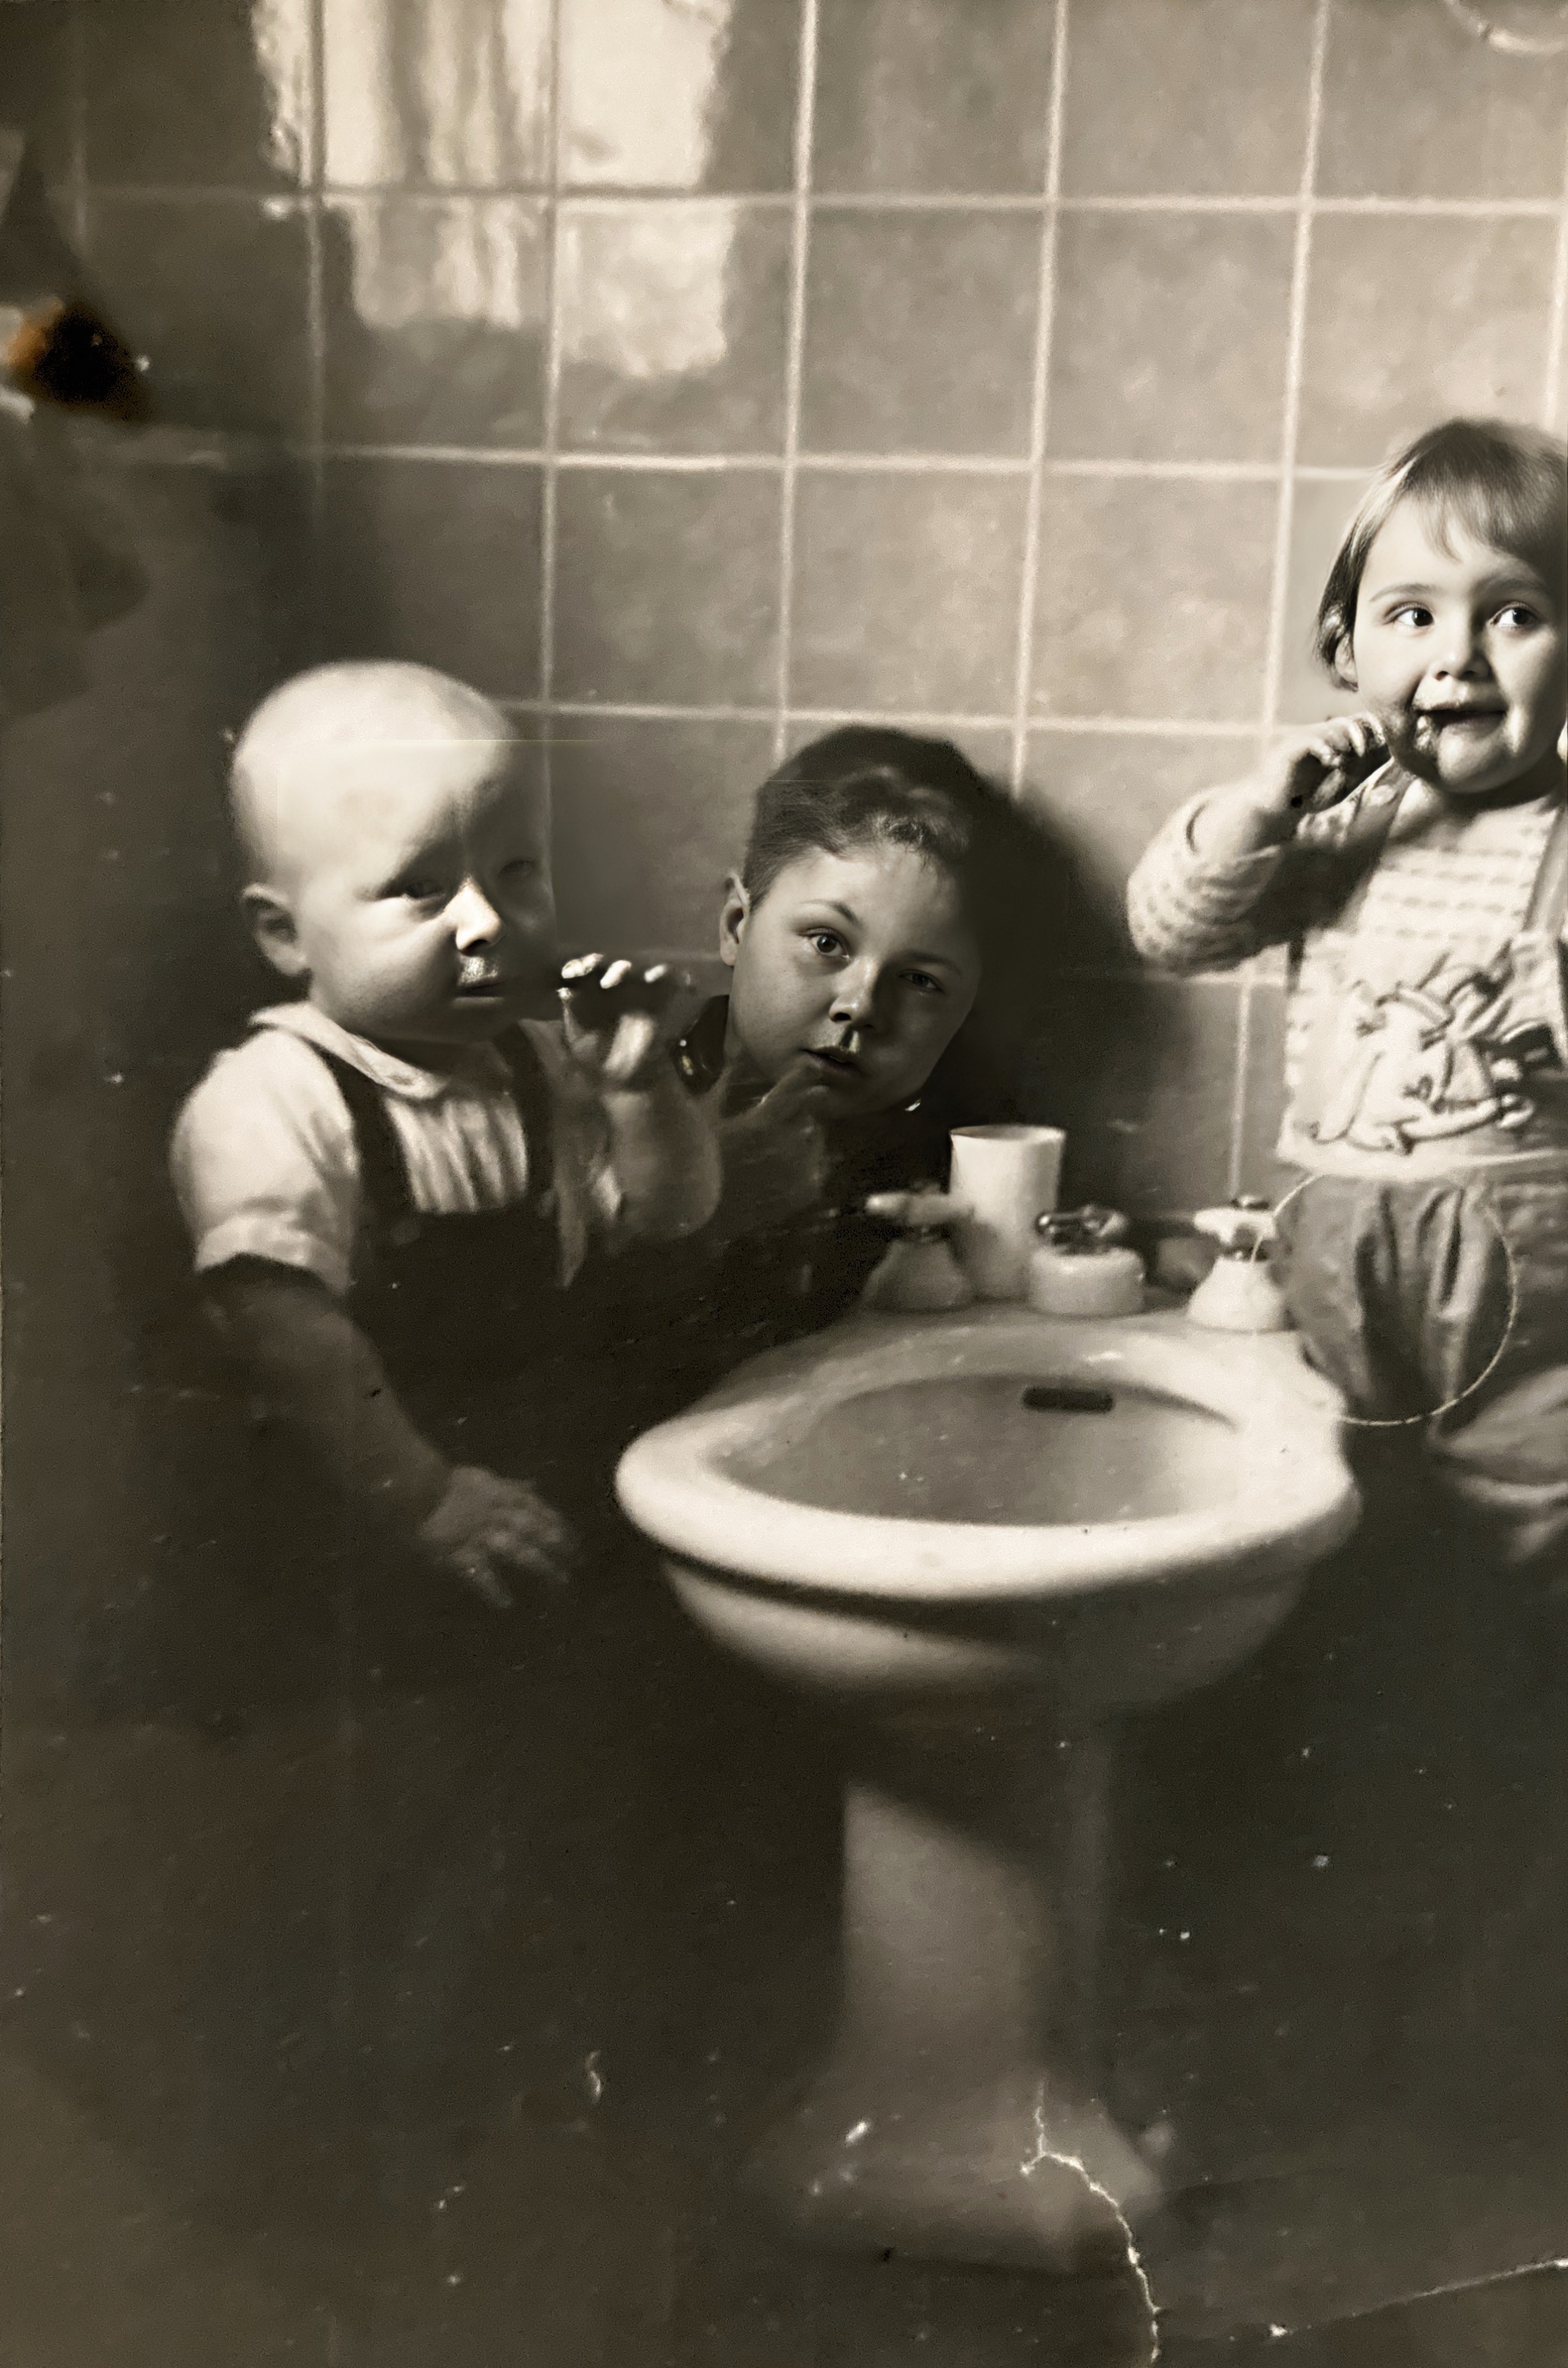 Vernon, Billy, and Chantal brushing teeth from bidet. 1953 France